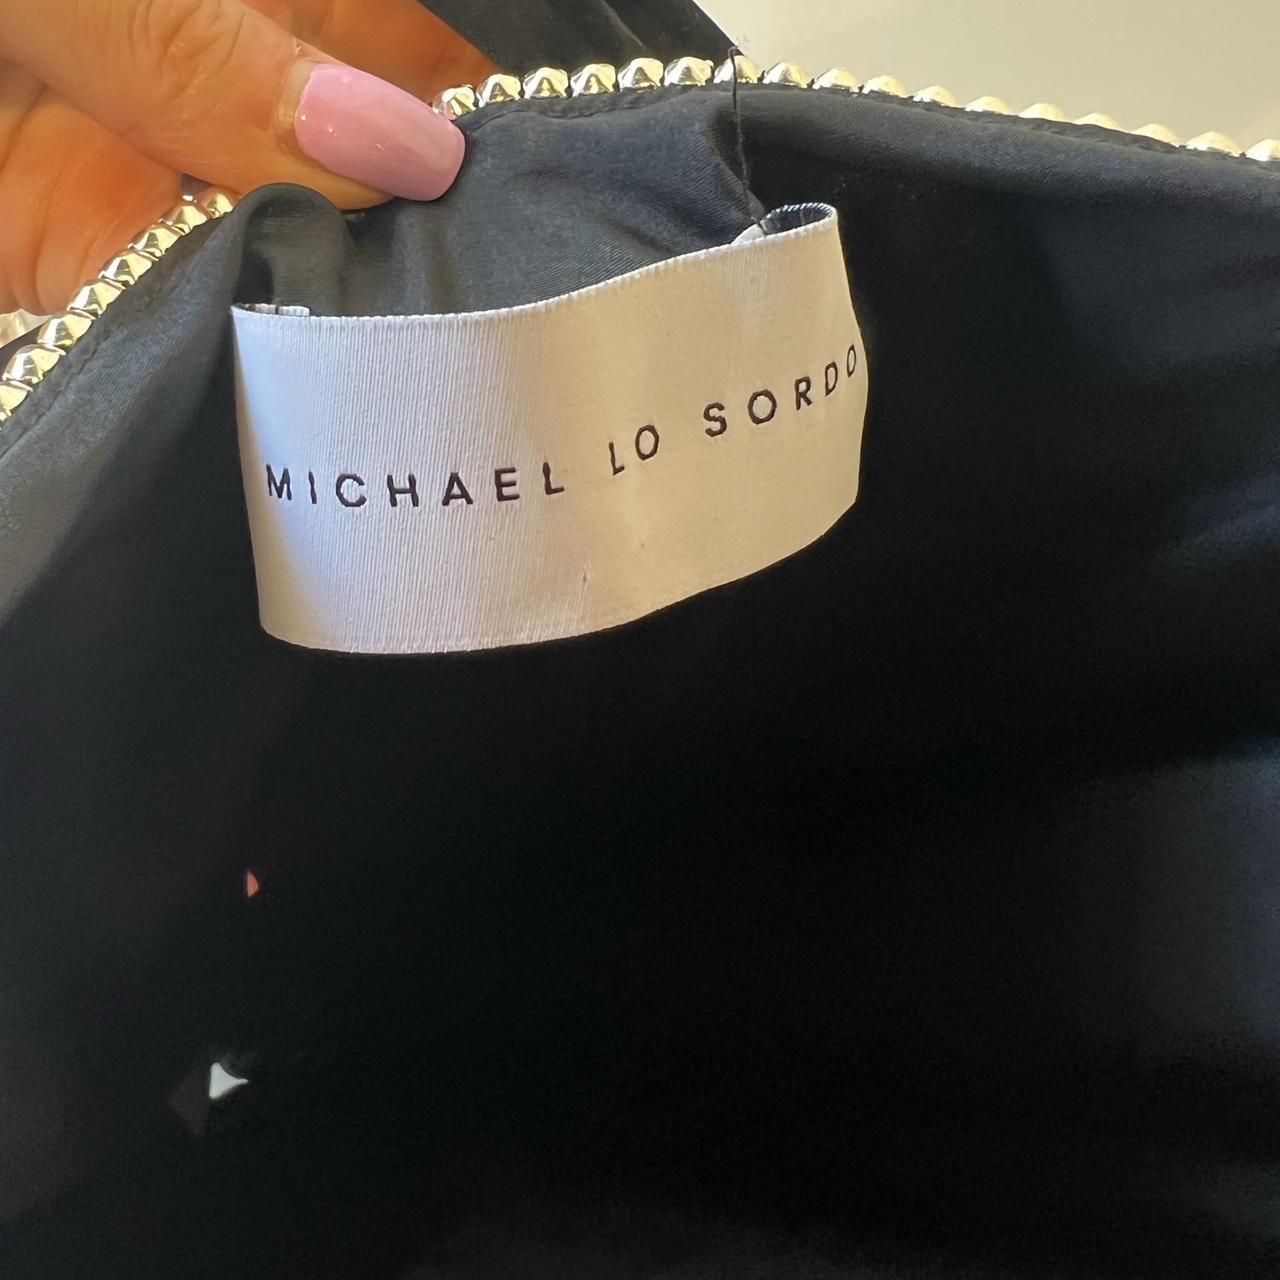 Michael Lo Sordo Symic Crystalline gown Size... - Depop